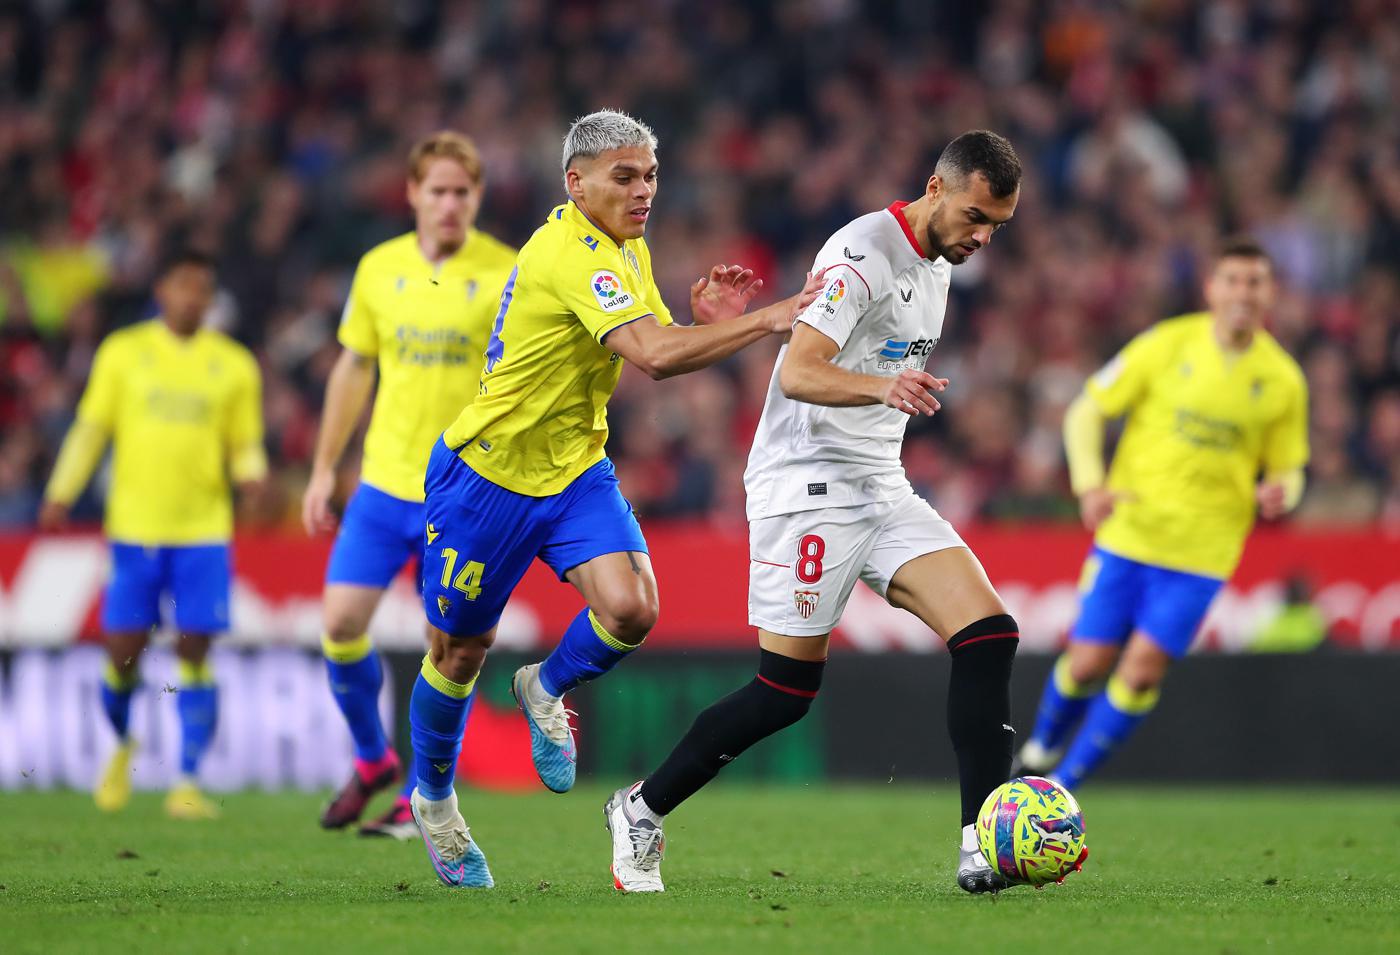 Cadiz - Sevilla - 0:2. Spanish Championship, 27th round. Match review, statistics